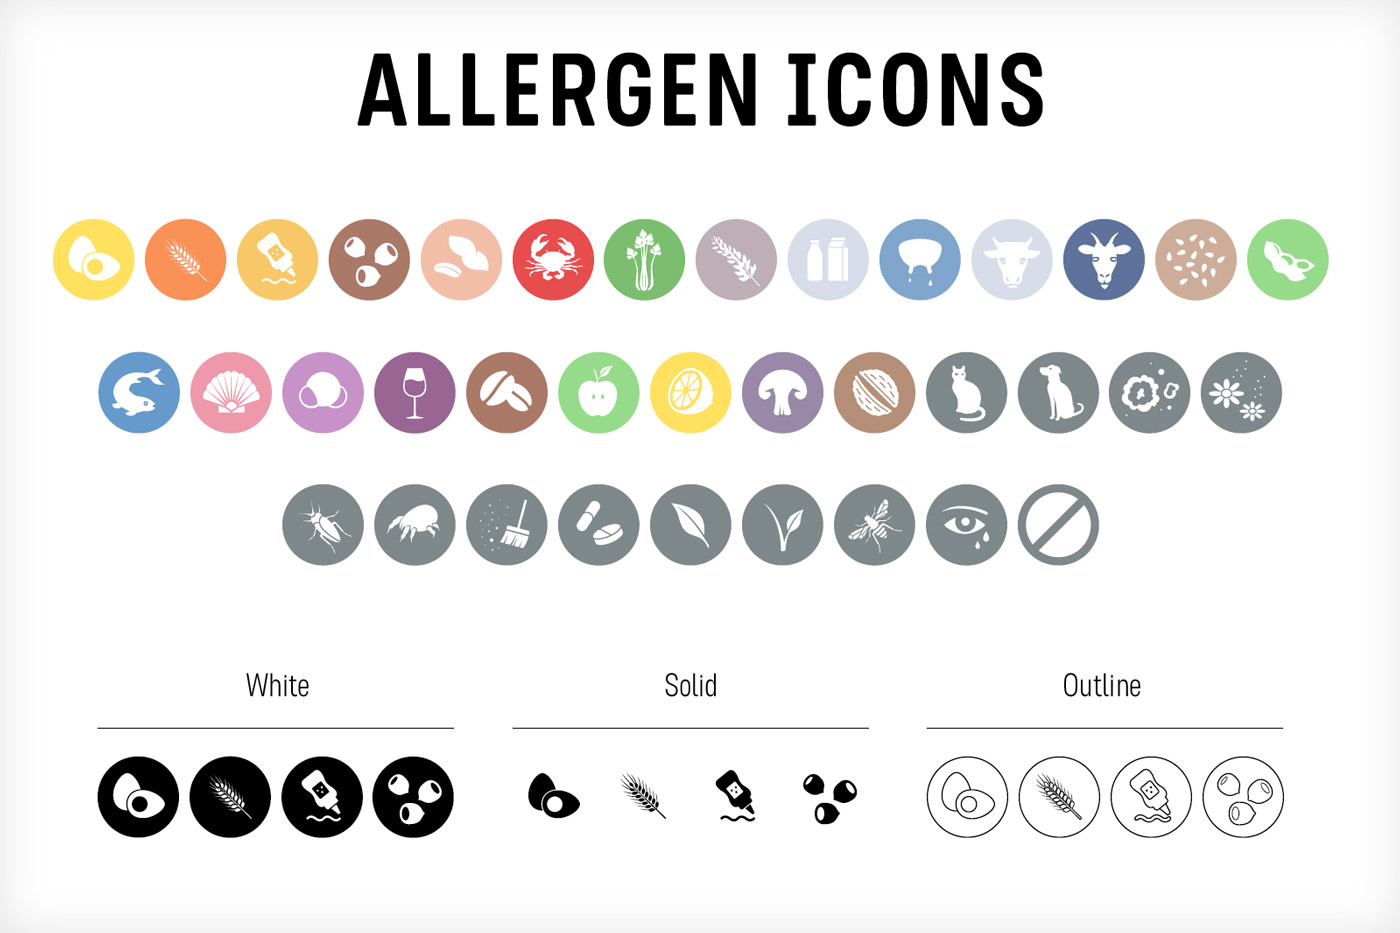 Allergen icons font